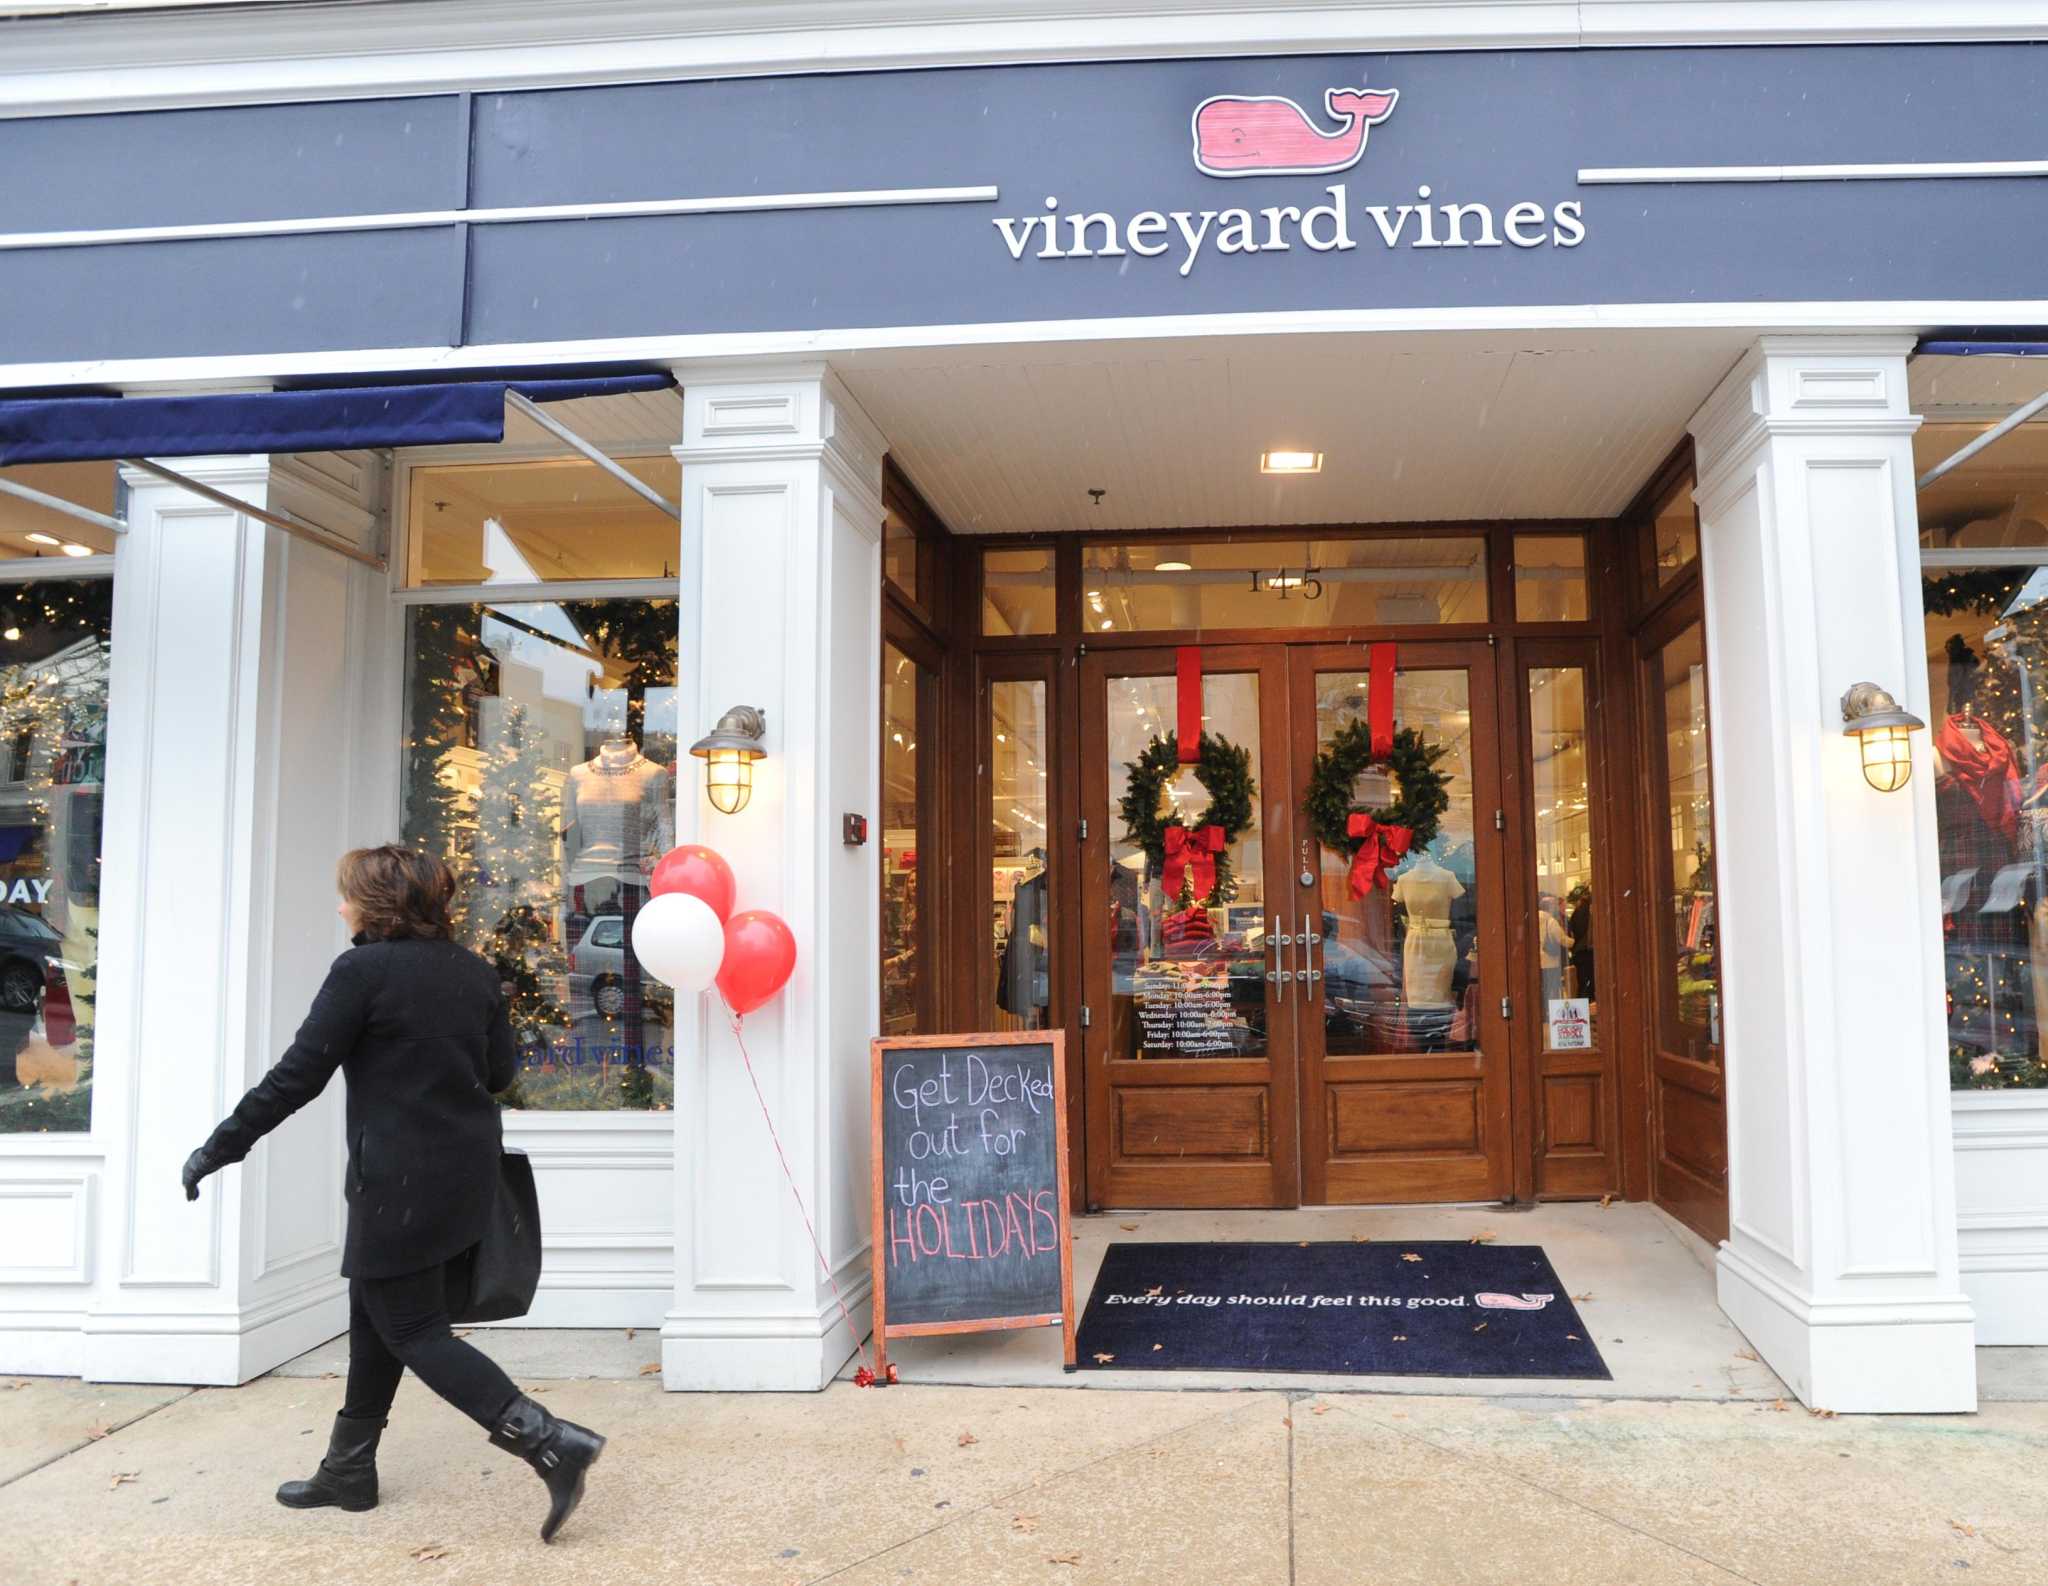 JPMorgan Opens a Vineyard Vines Pop-up Store at Its NYC HQ